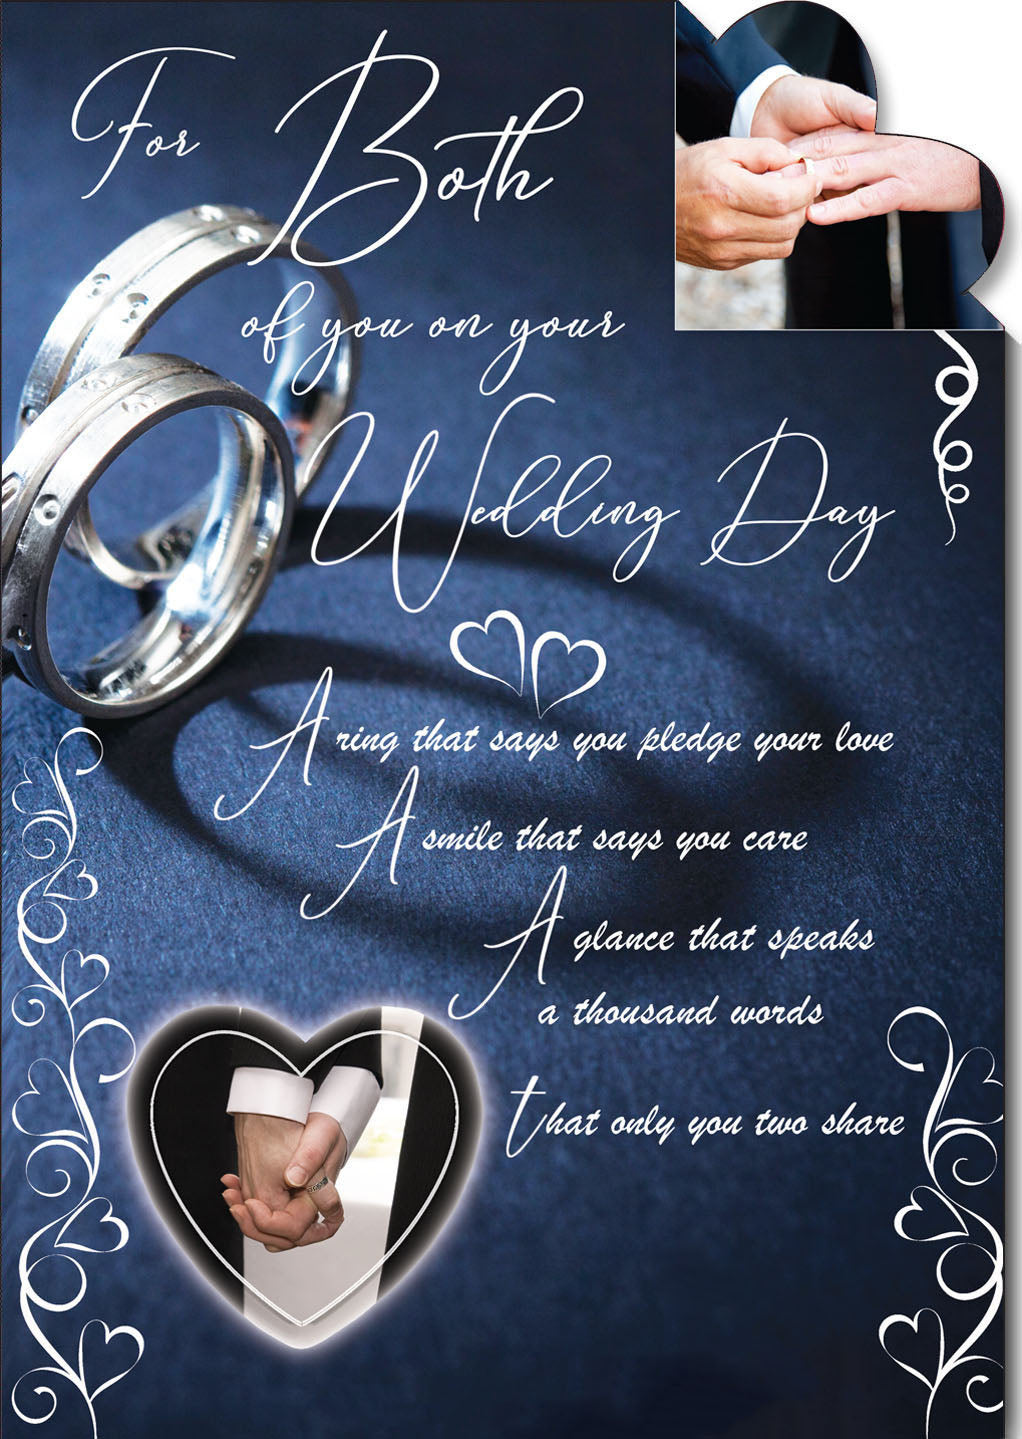 Mr & Mr. Wedding Card - Boundless Love